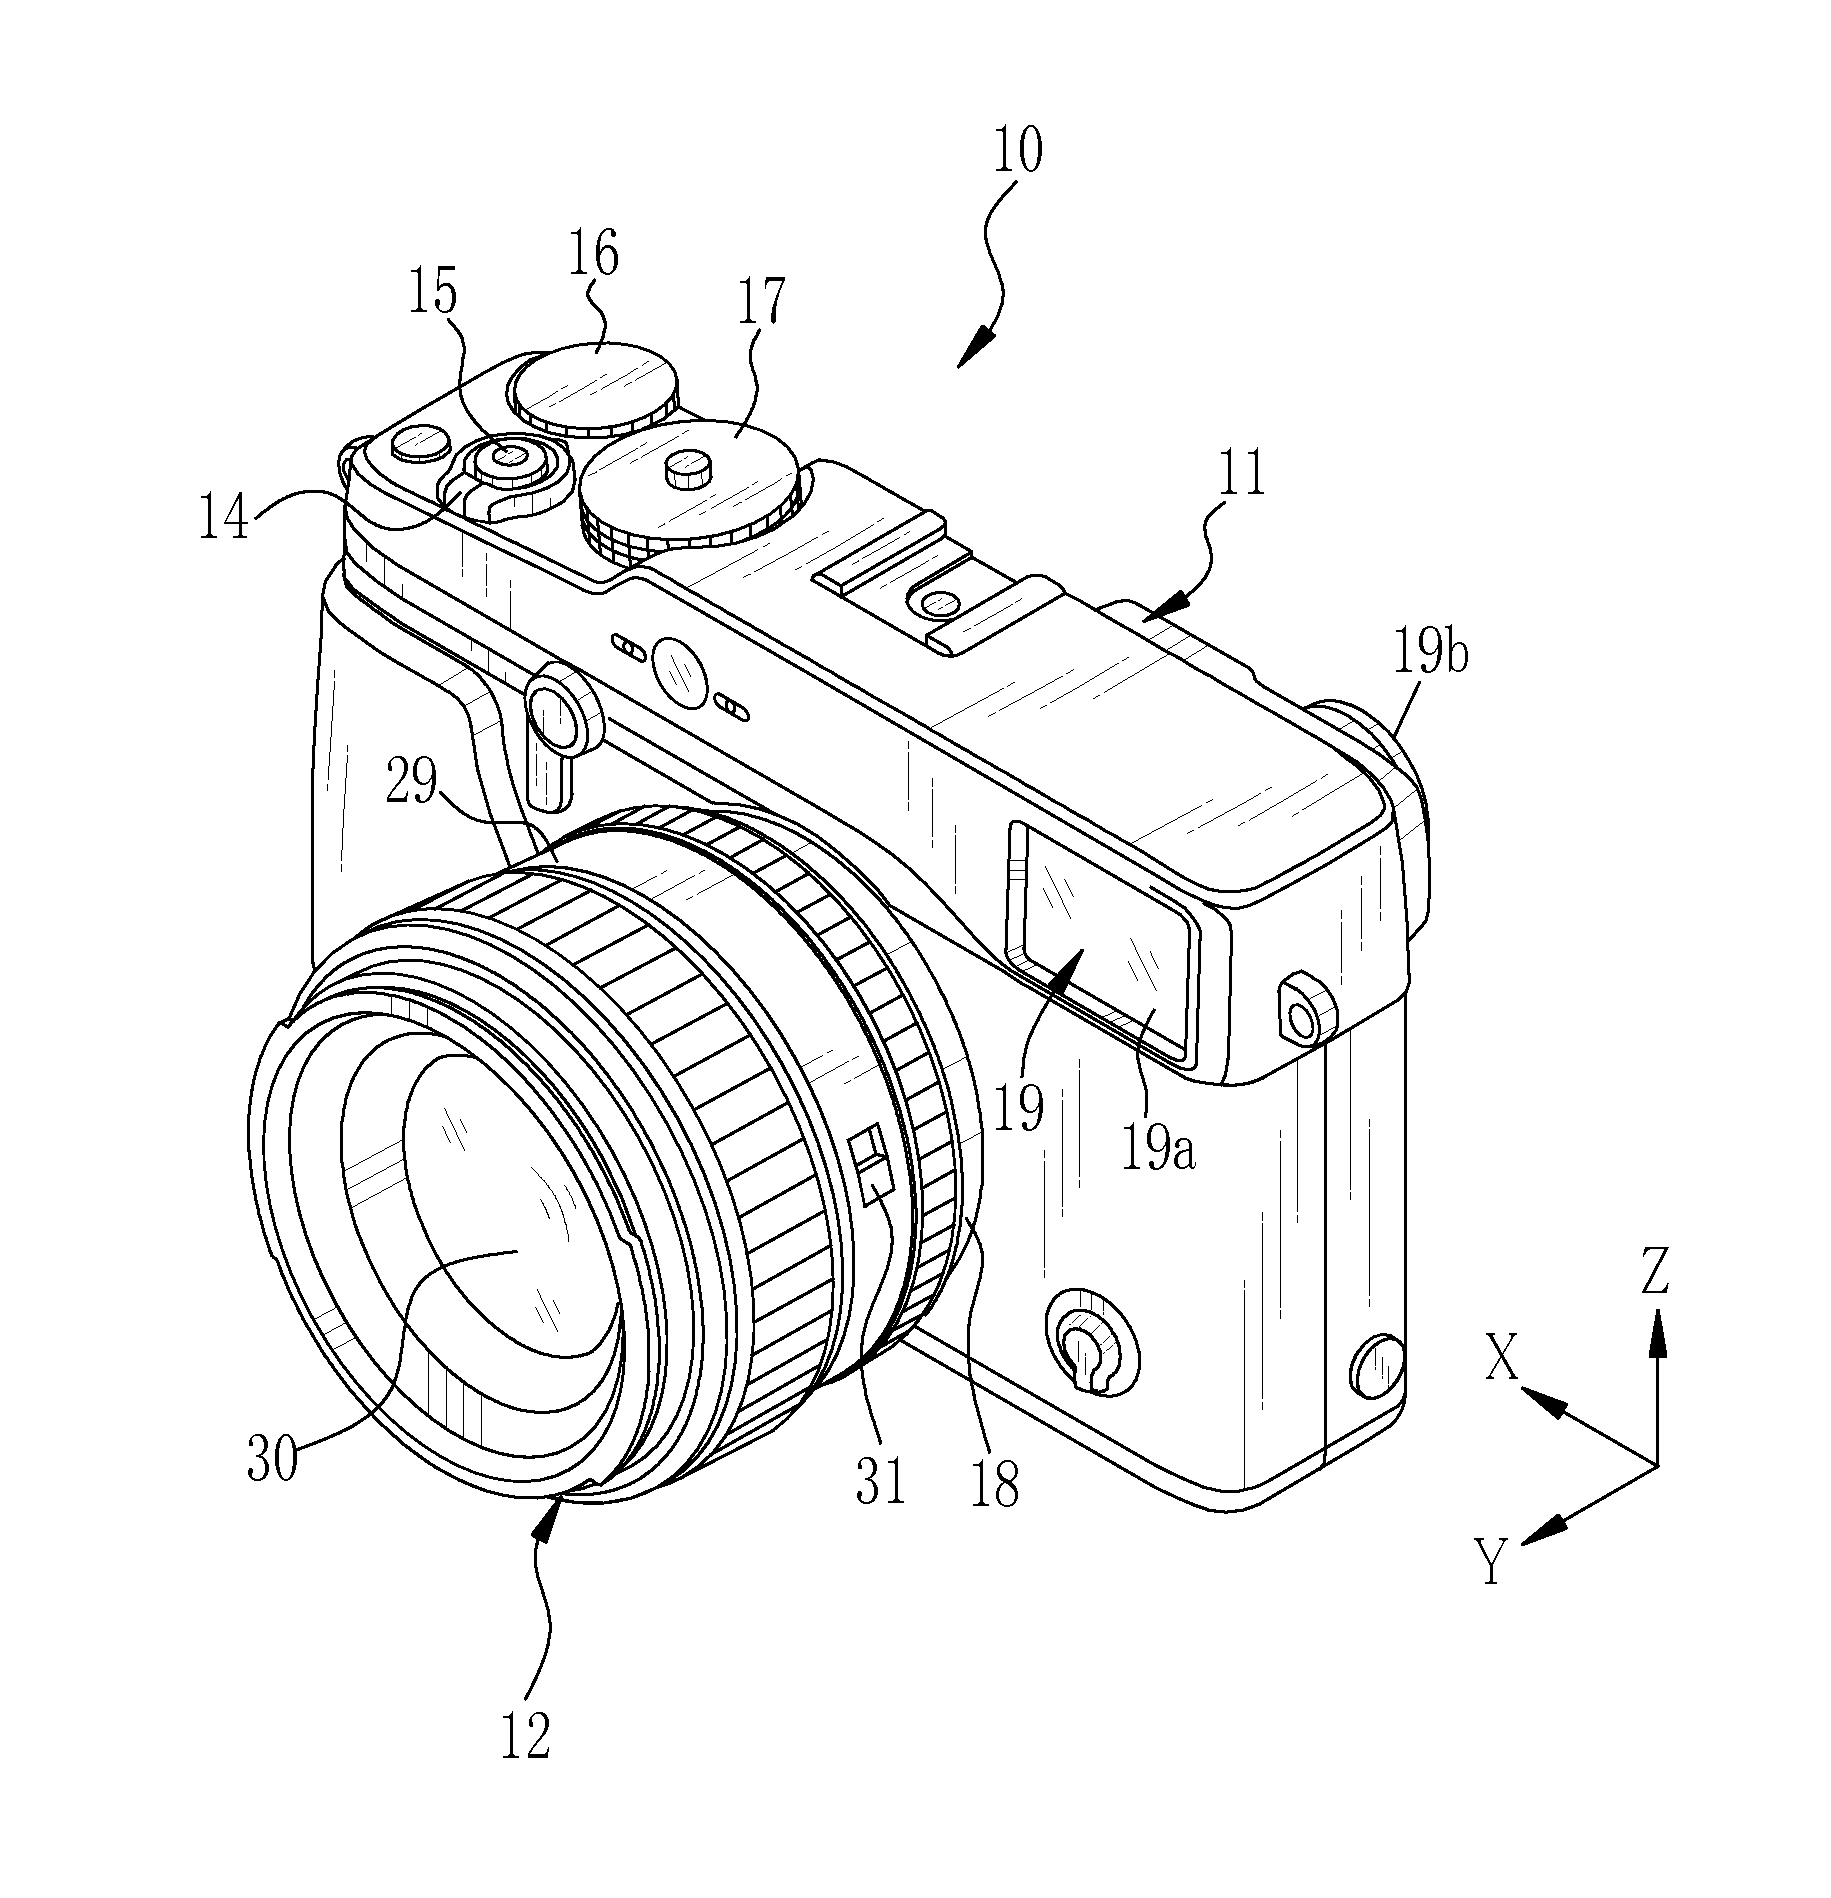 Interchangeable lens digital camera